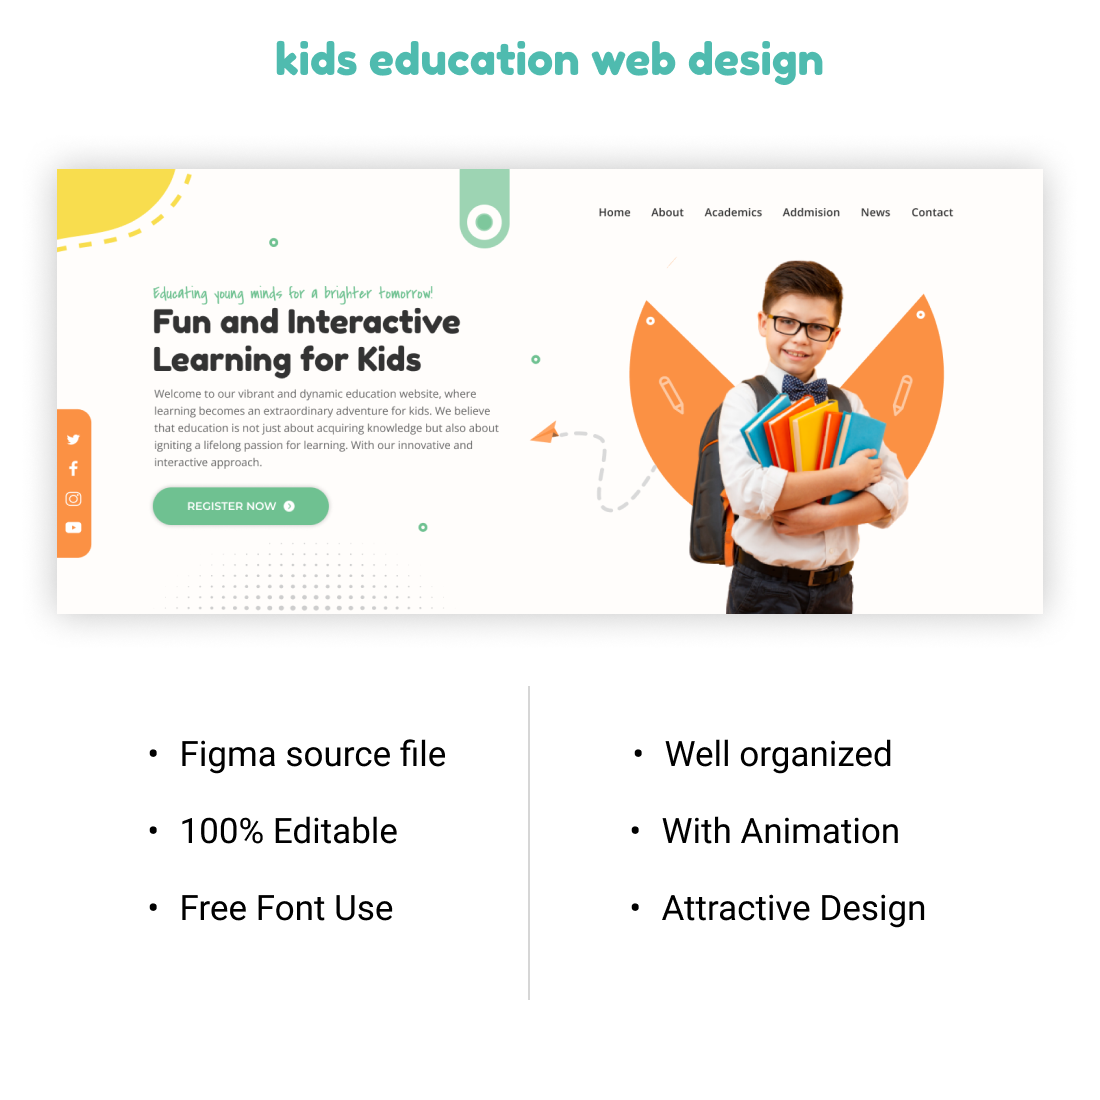 Creative Kids Education Web Design preview image.